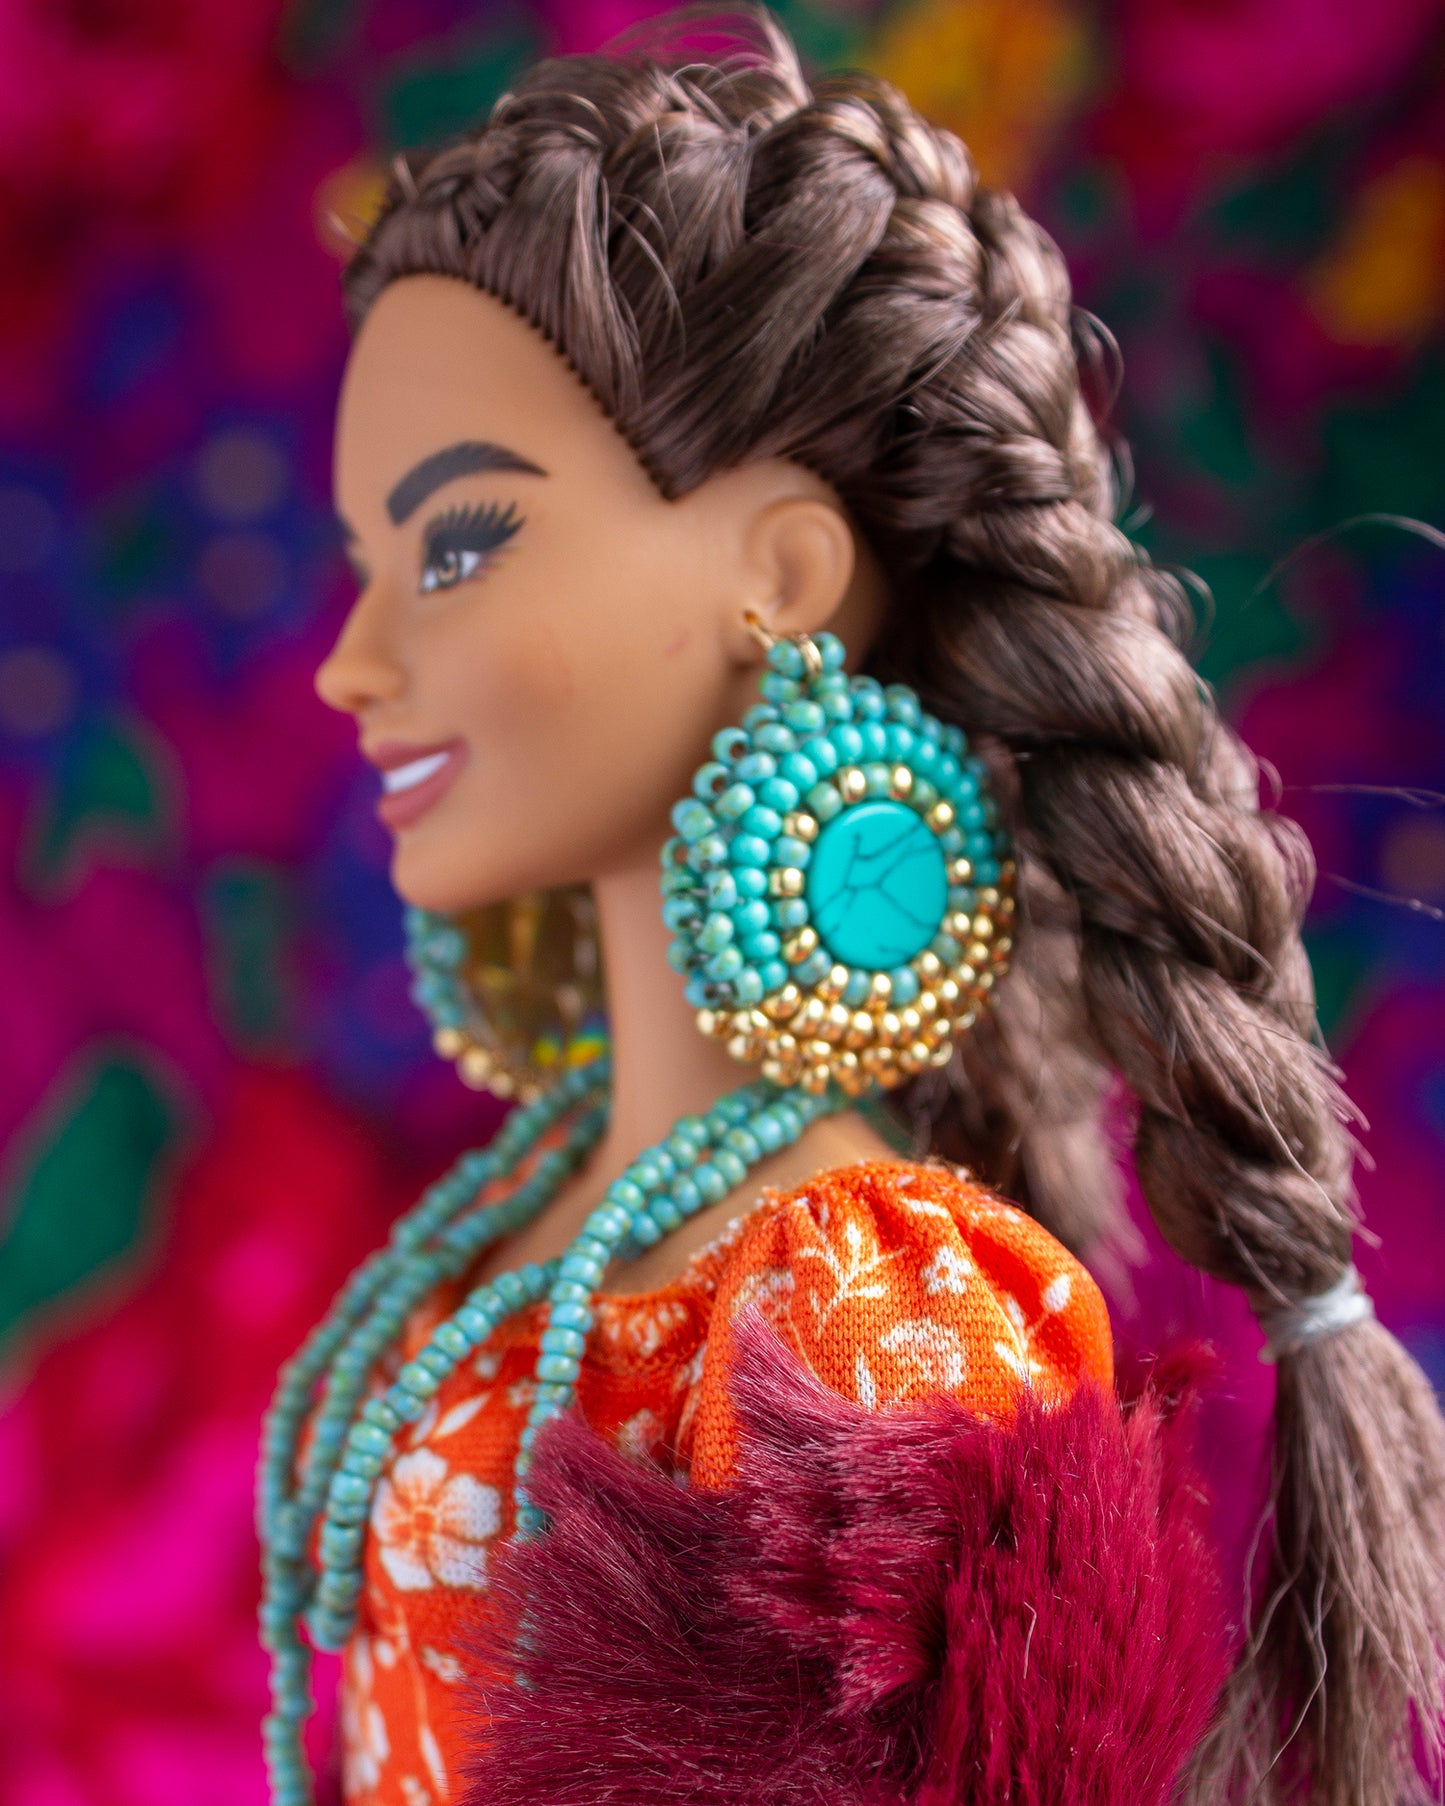 Doll #10 Latina-Indigenous Beauty